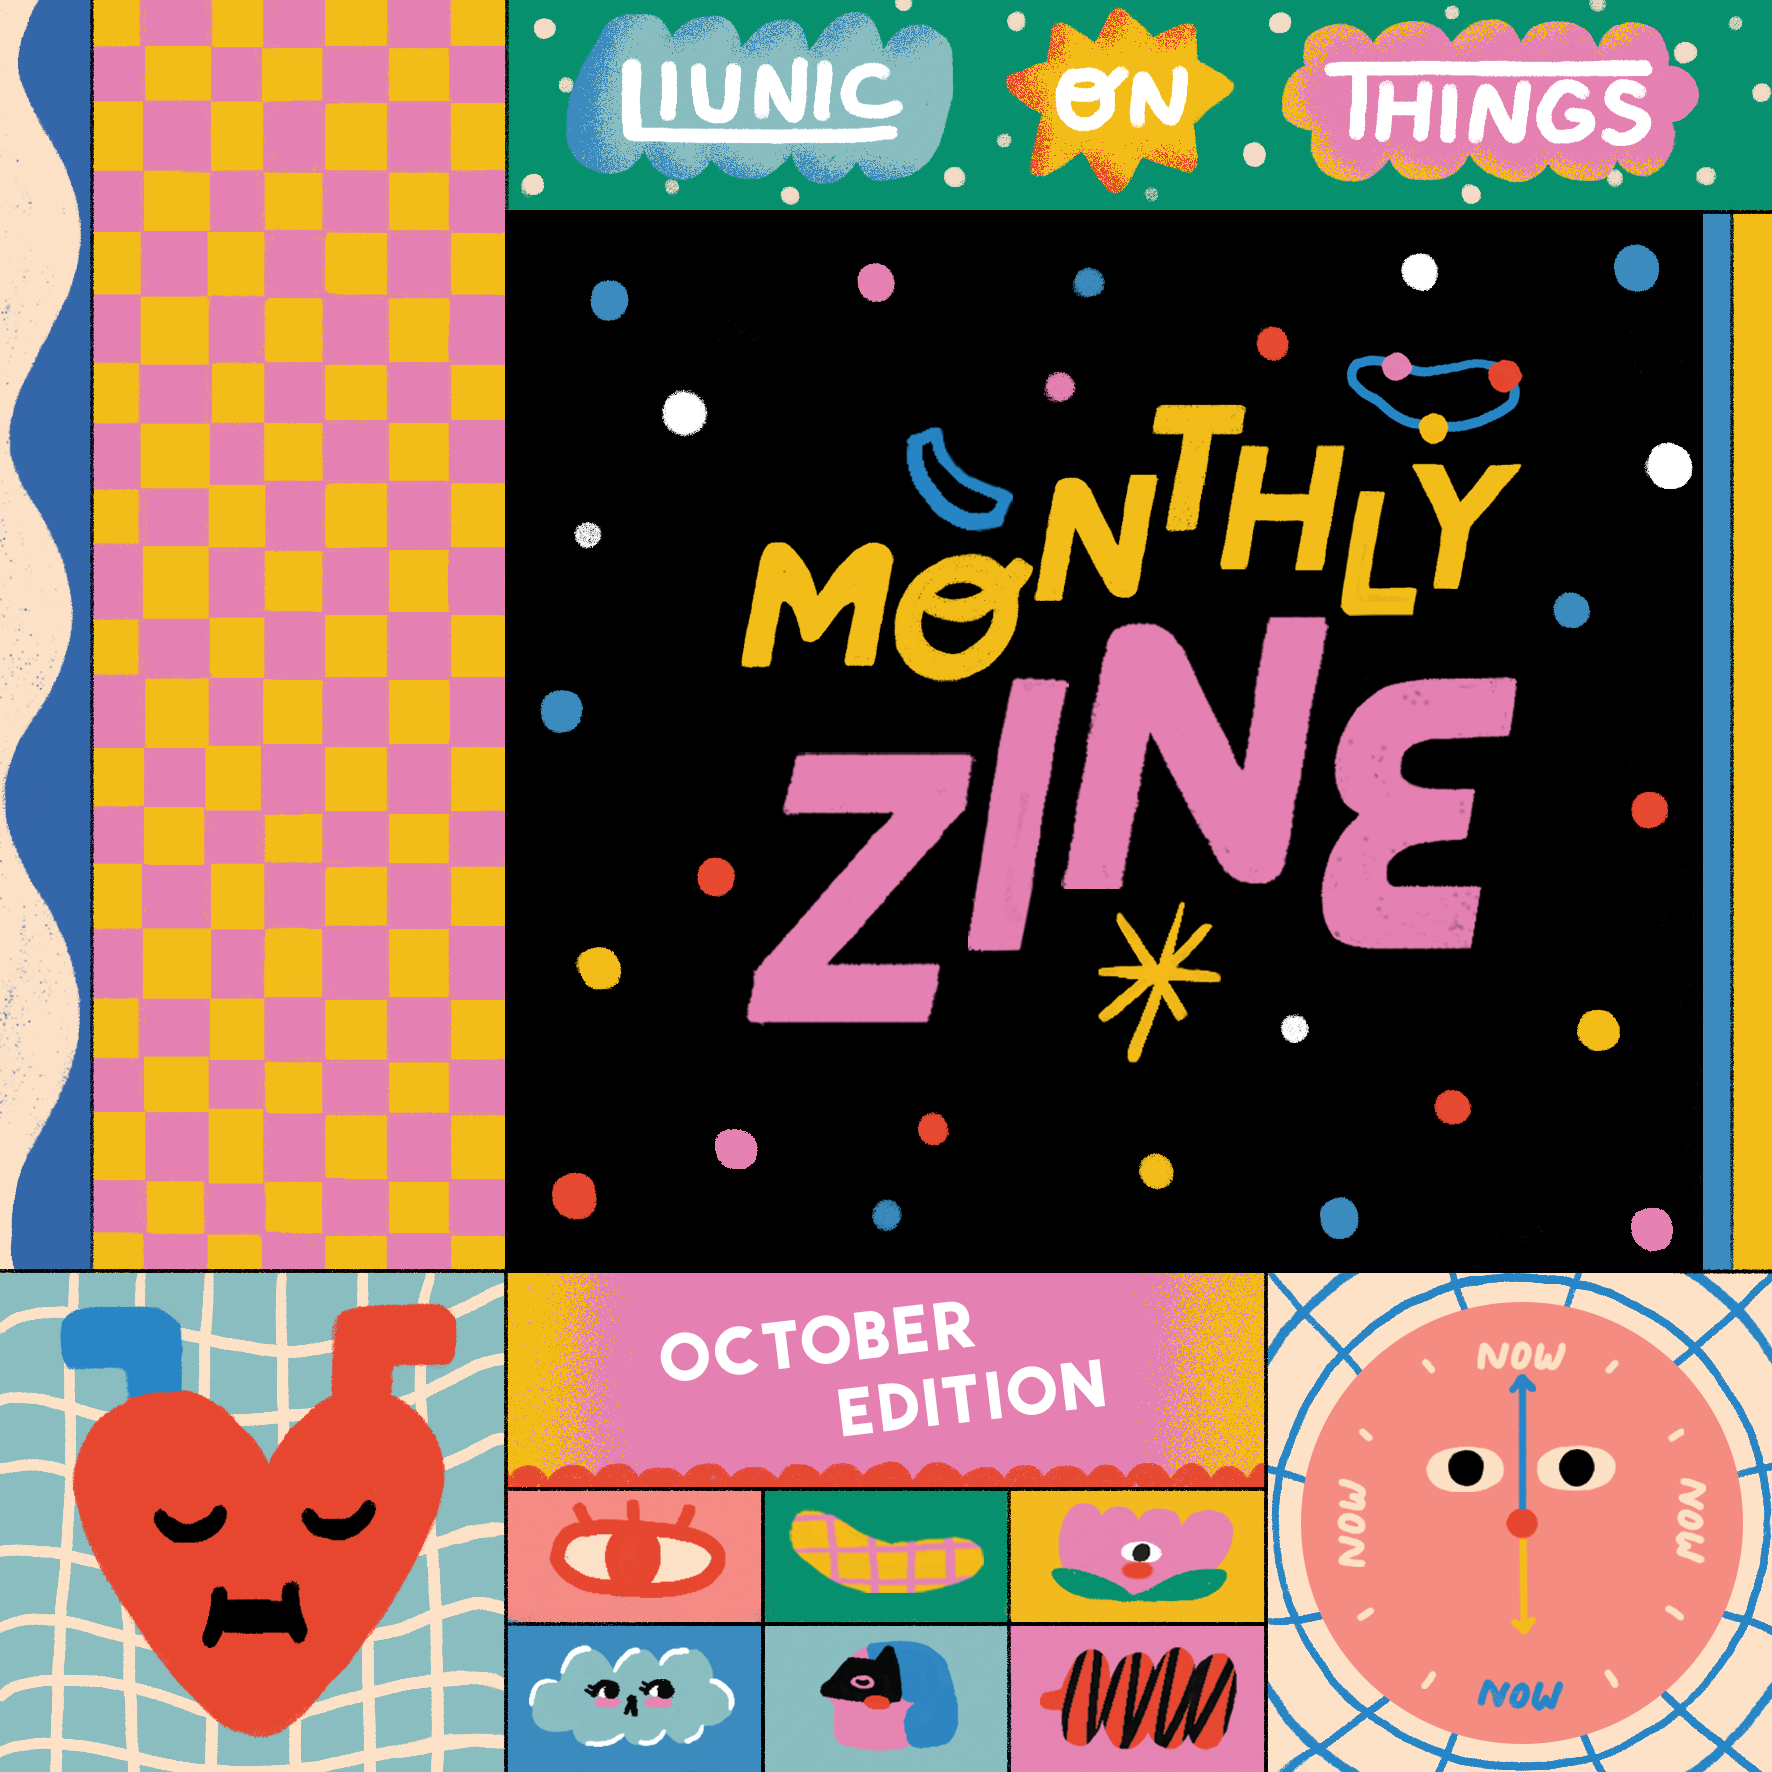 Liunic sur Things Monthly Zine : édition d'octobre !